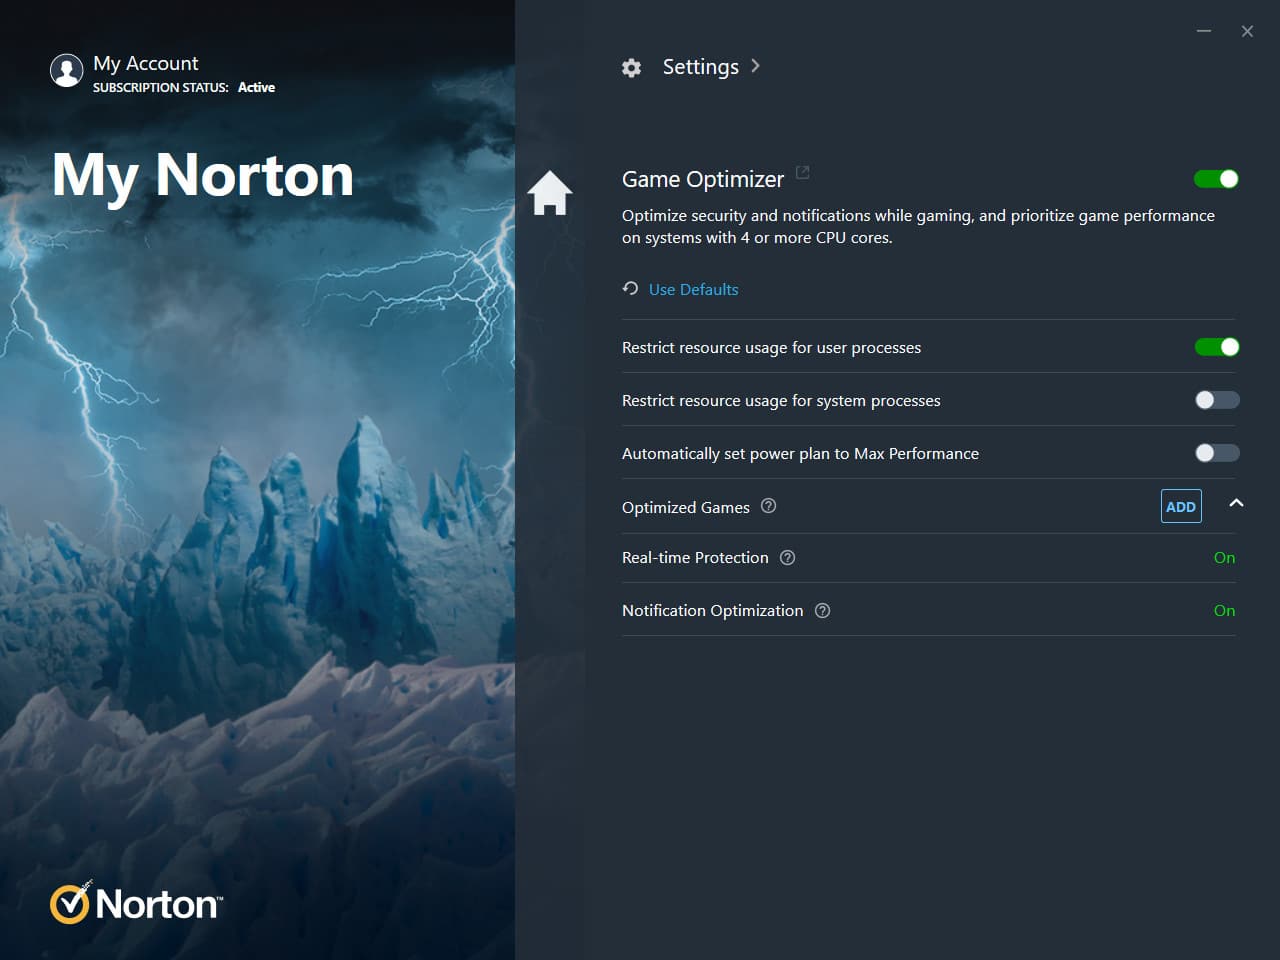 Norton 360 for Gamers game optimization